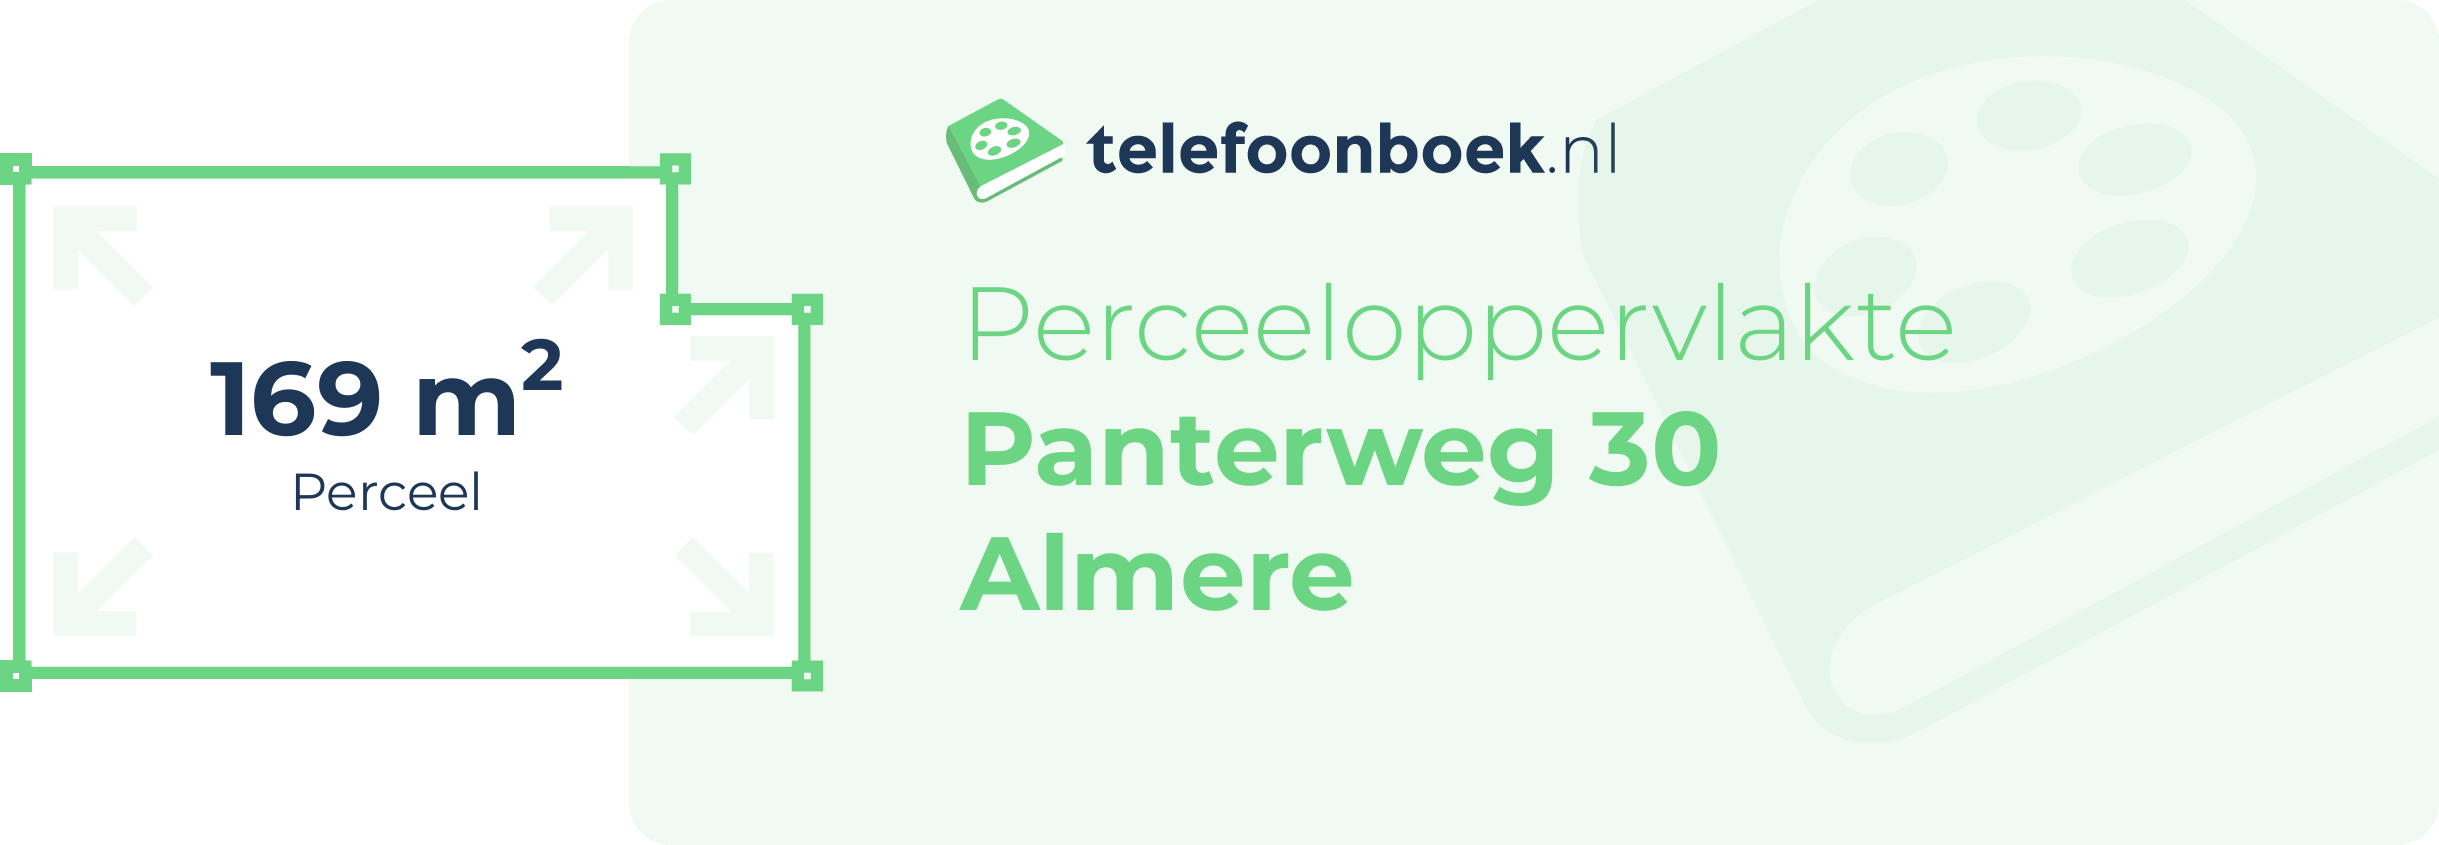 Perceeloppervlakte Panterweg 30 Almere